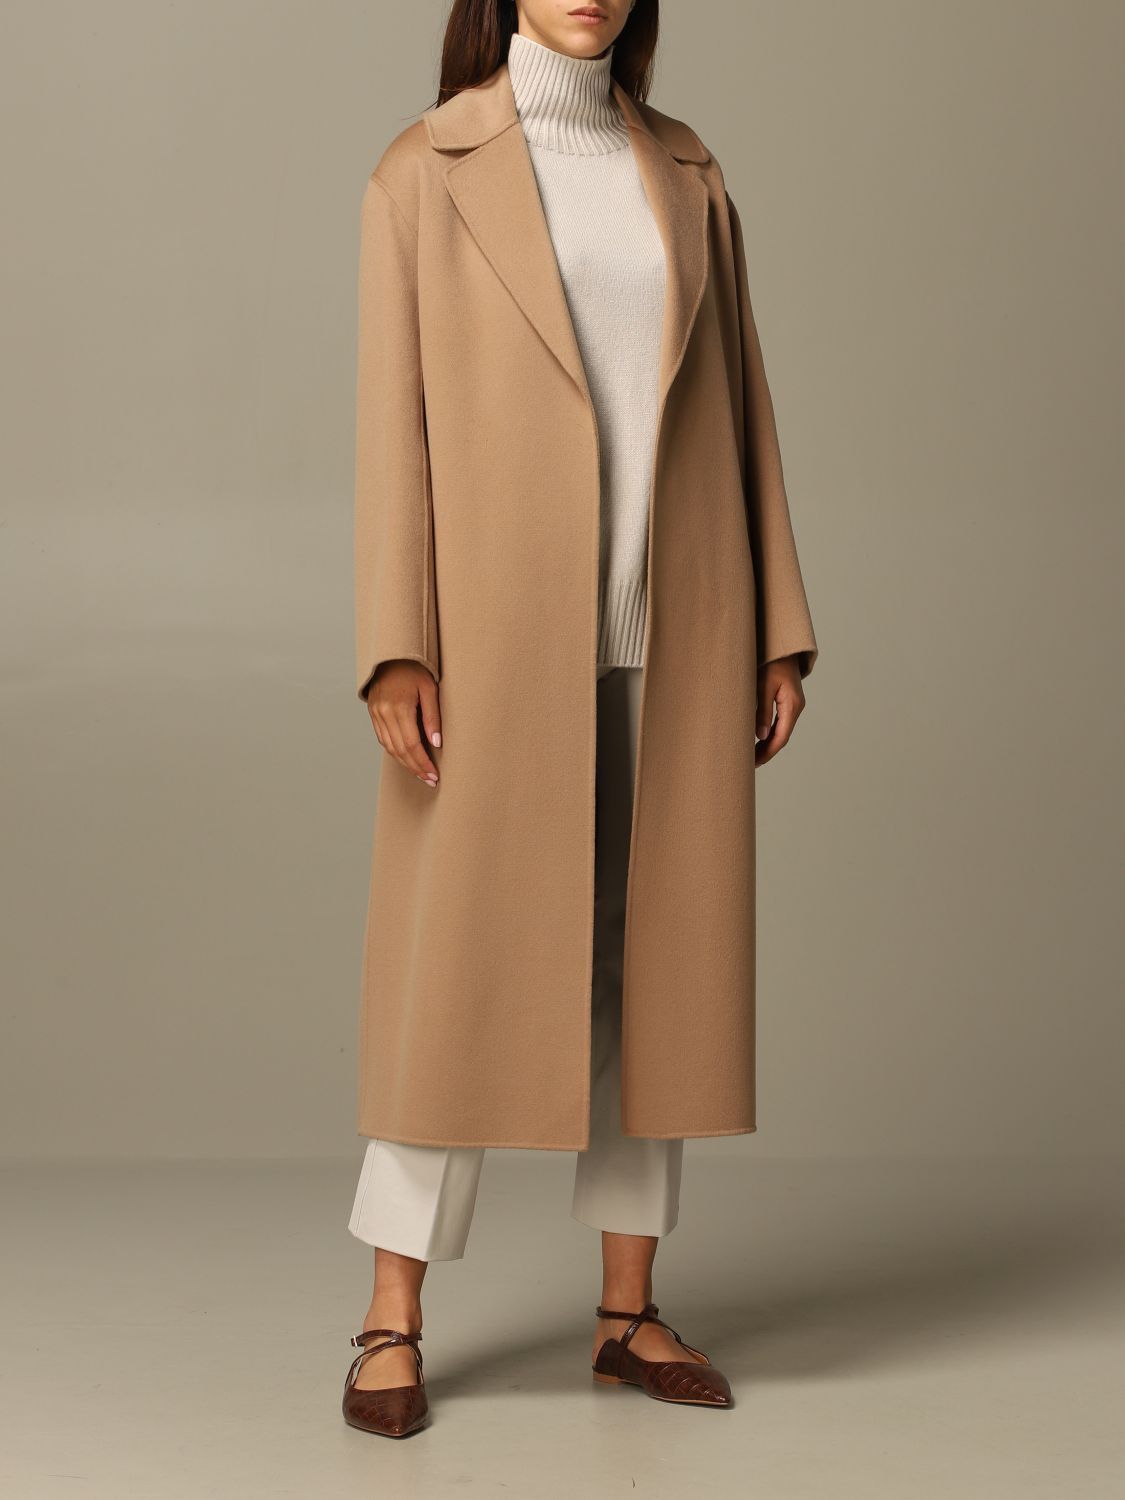 S MAX MARA: Lugano coat in virgin wool - Camel | Coat S Max Mara ...